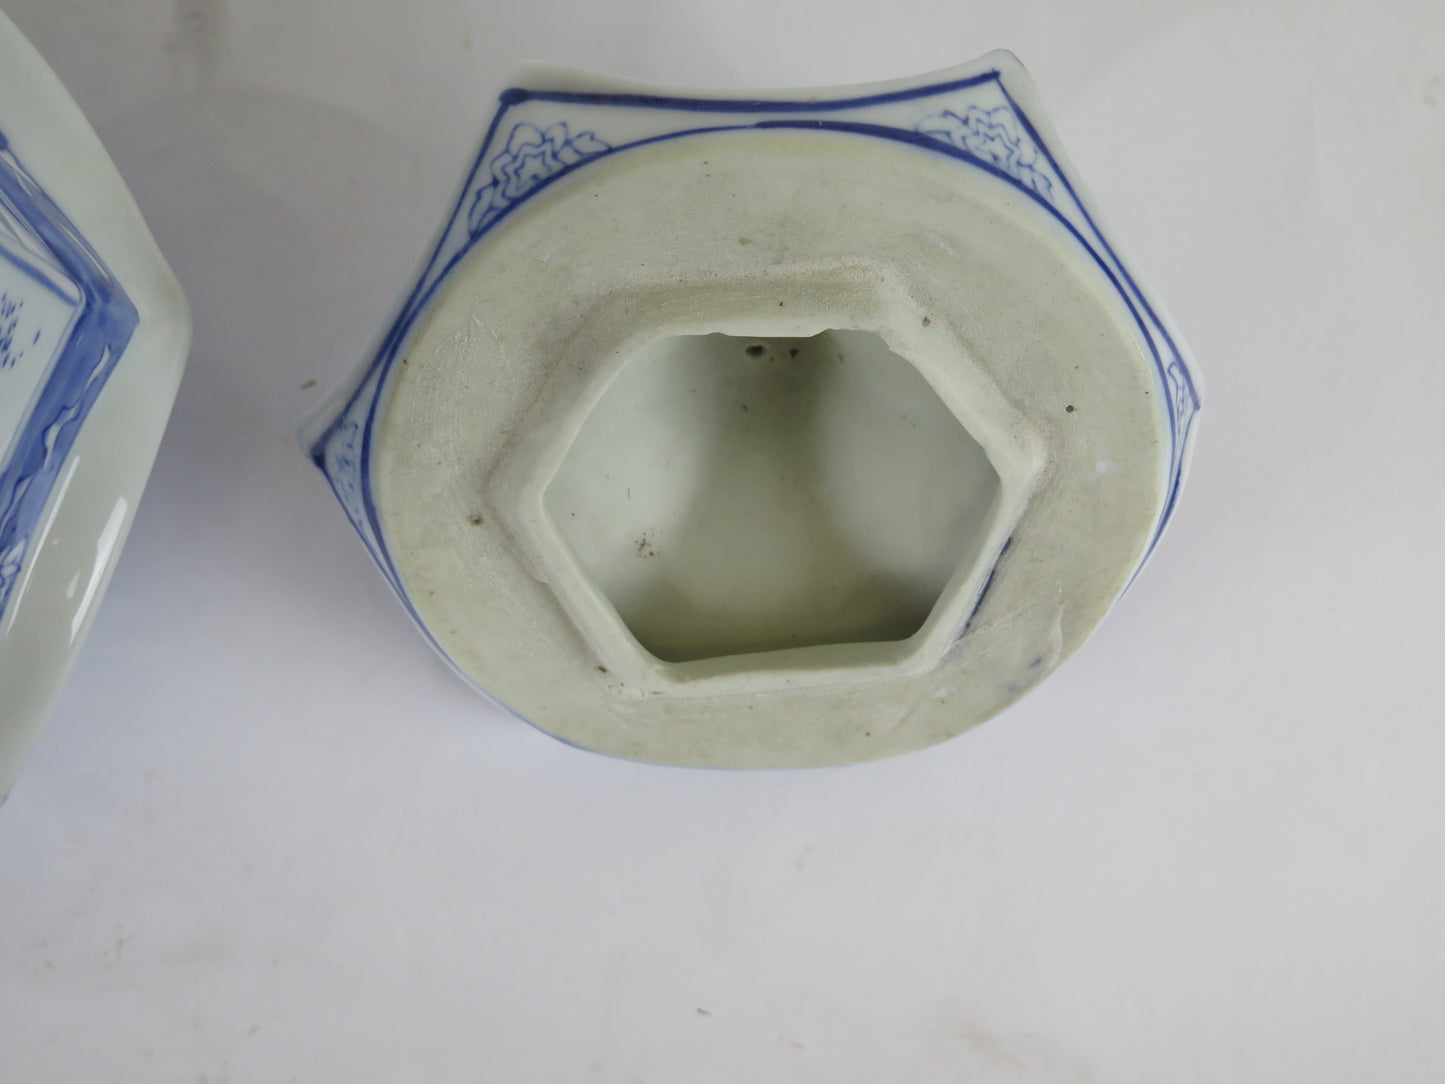 Chinese blue white ceramic urn vase China Asia vintage ceramic vase hand painted blue white CM8